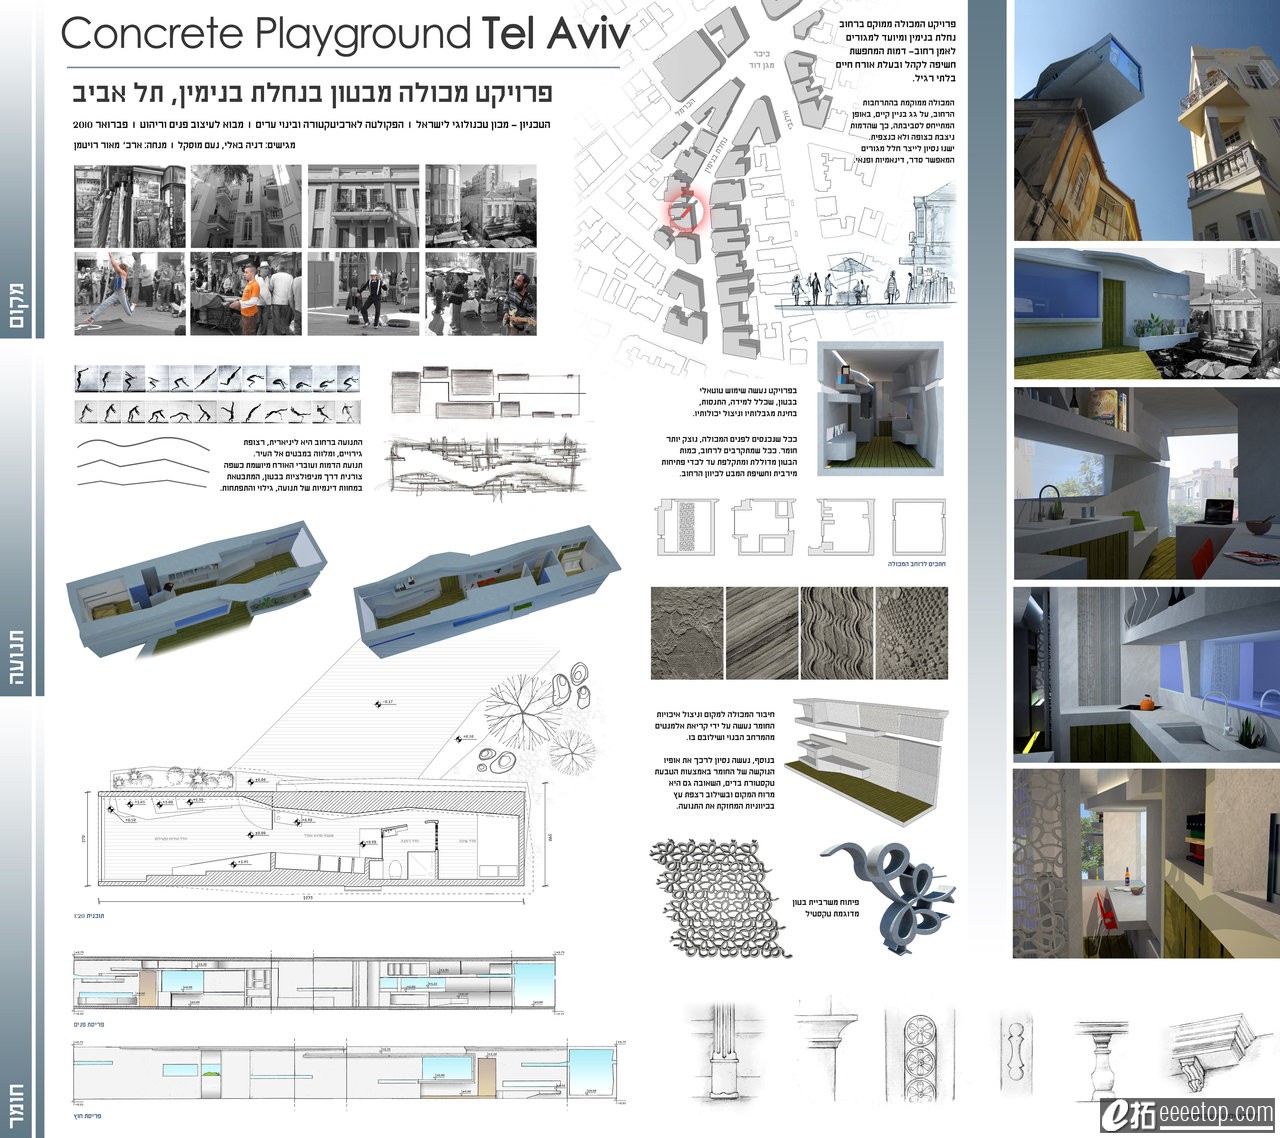 Concrete Playground - Tel Aviv.jpg